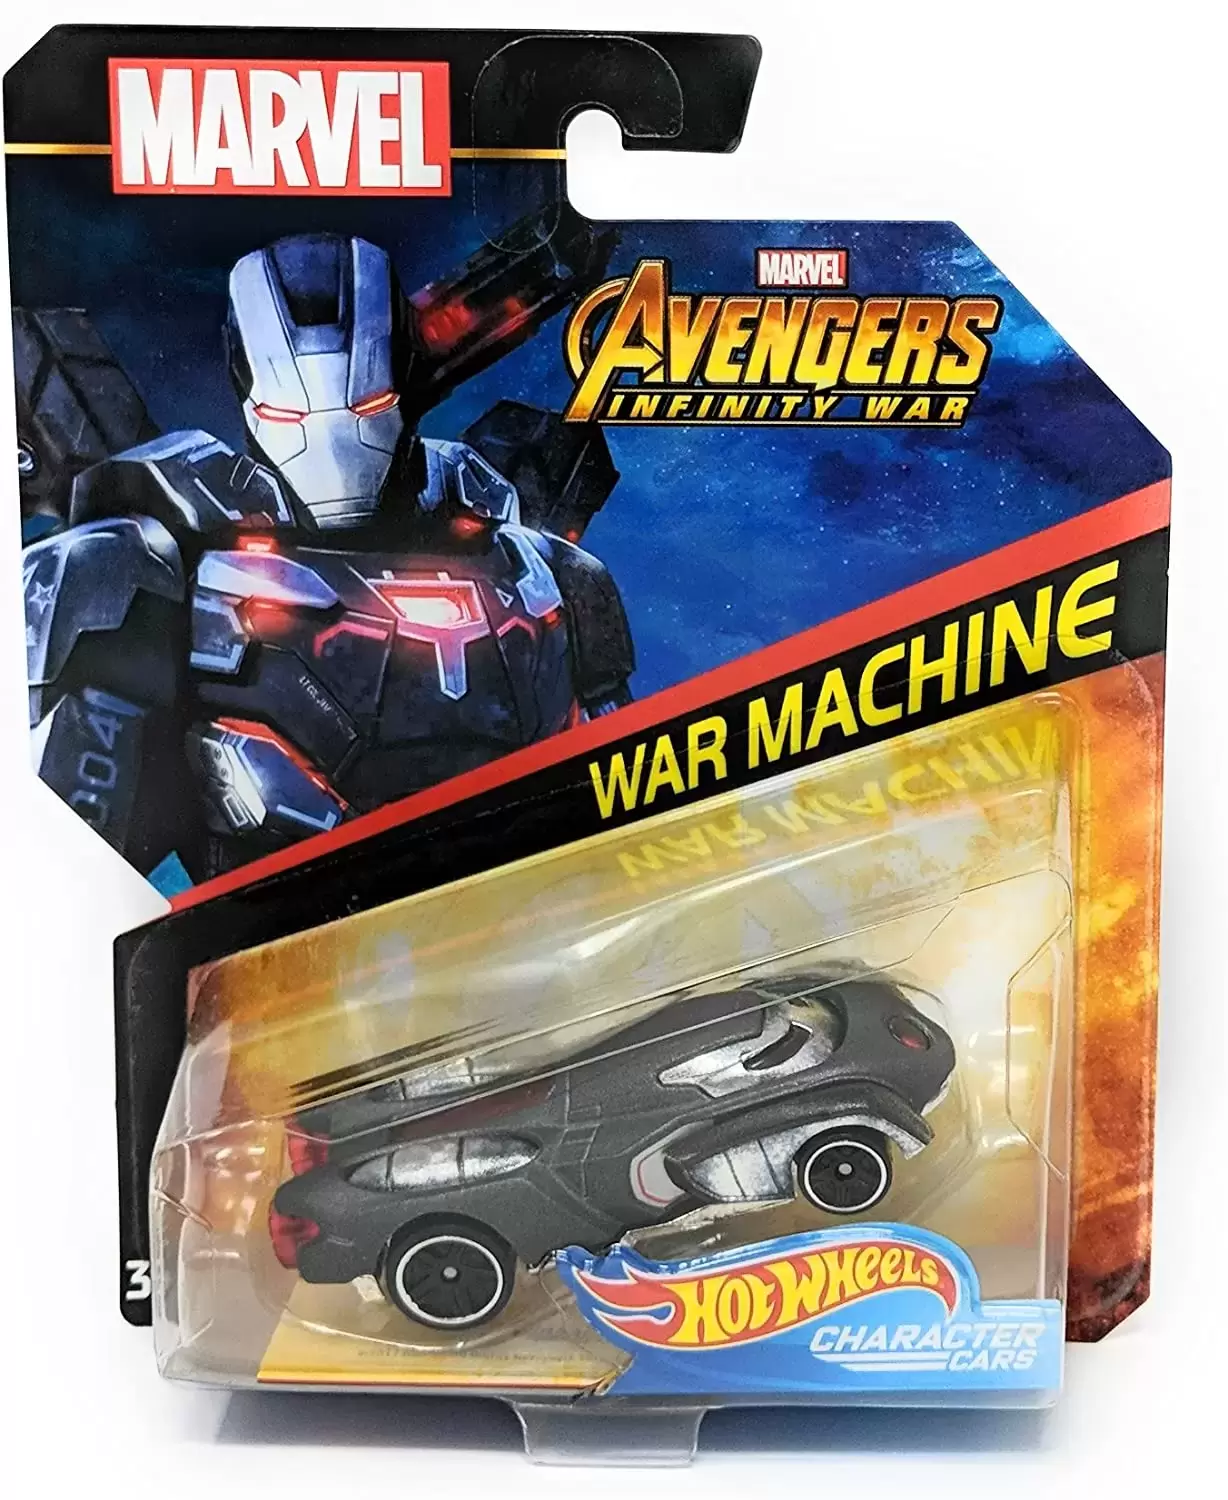 Marvel Character Cars - Avengers Infinity Wars - War Machine